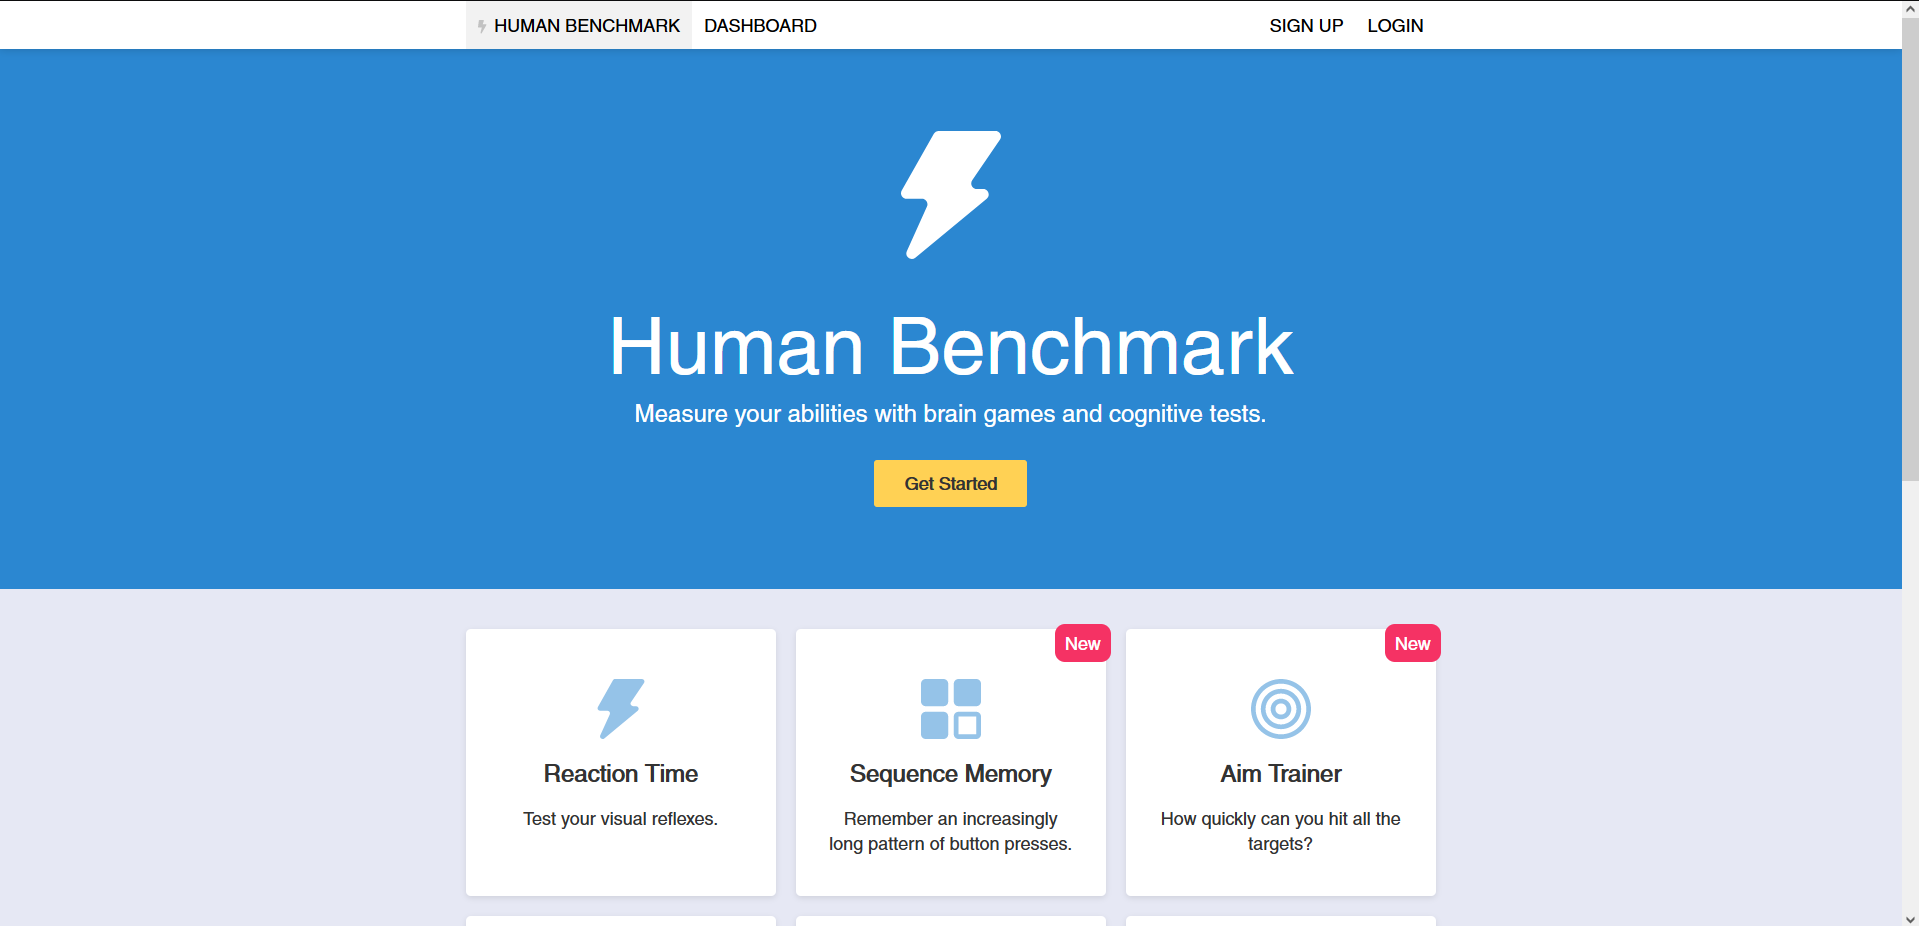 Human Benchmark - Aim Trainer 